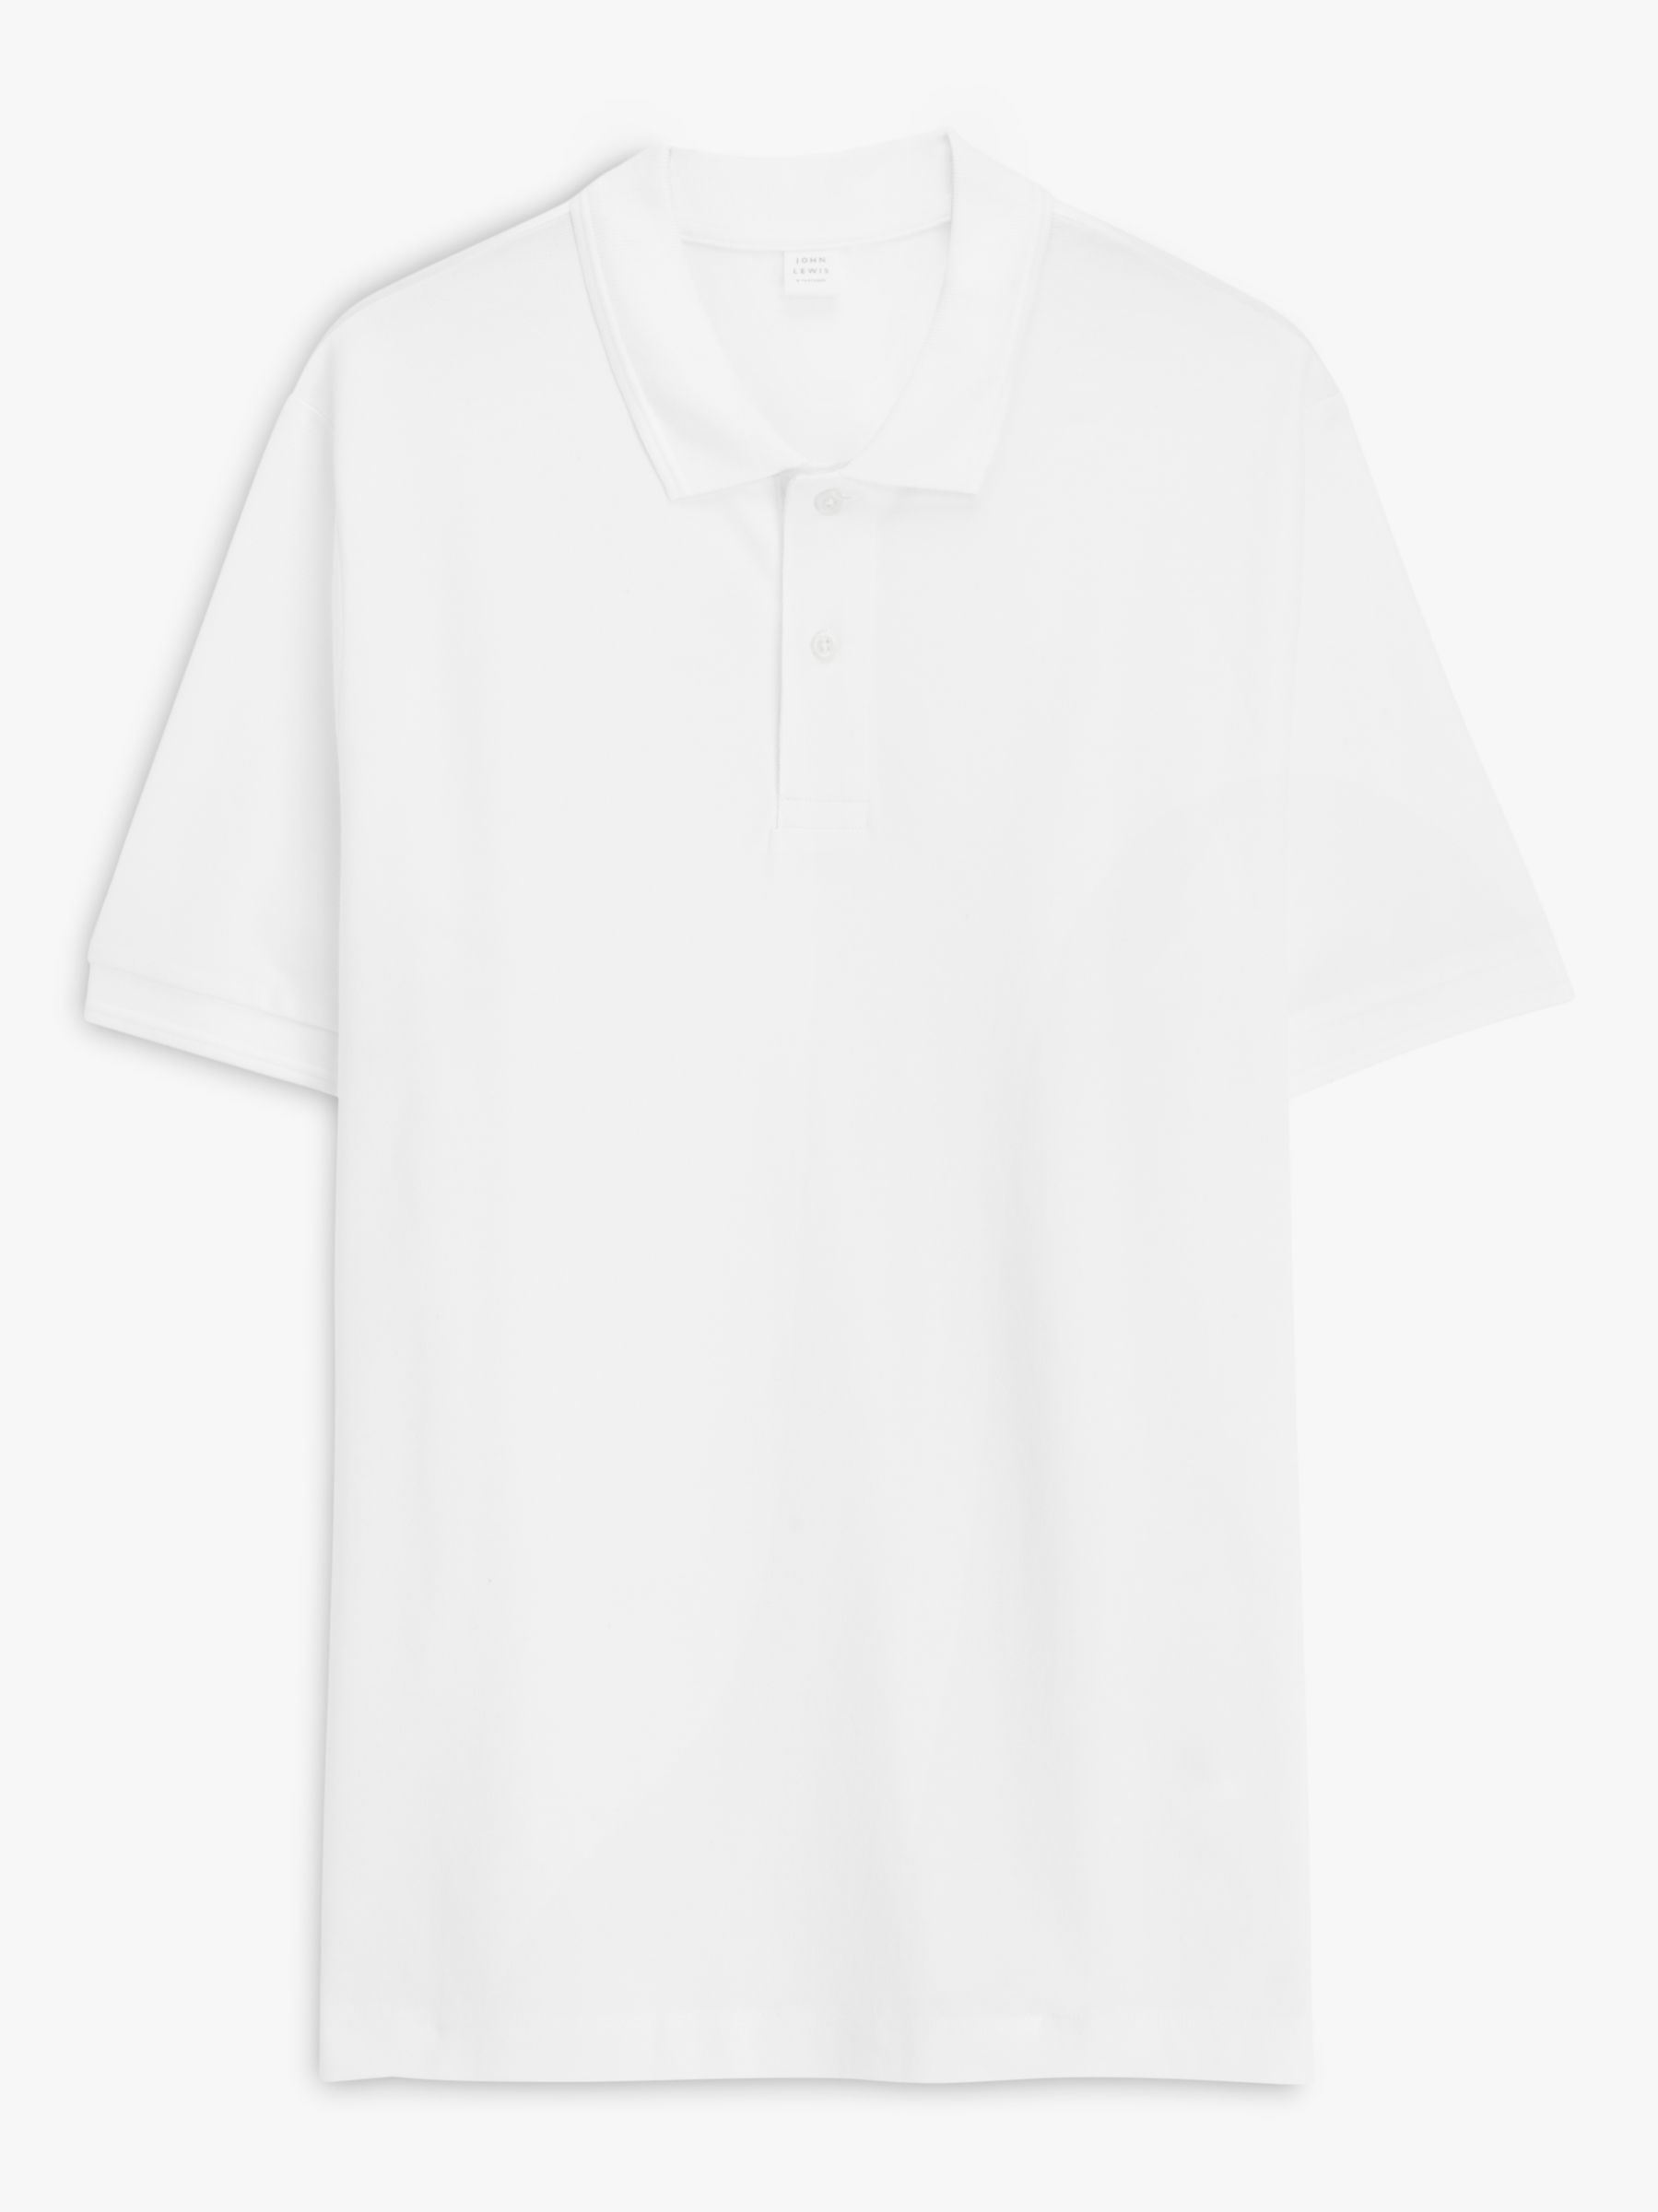 John Lewis Supima Cotton Jersey Polo Shirt, White at John Lewis & Partners